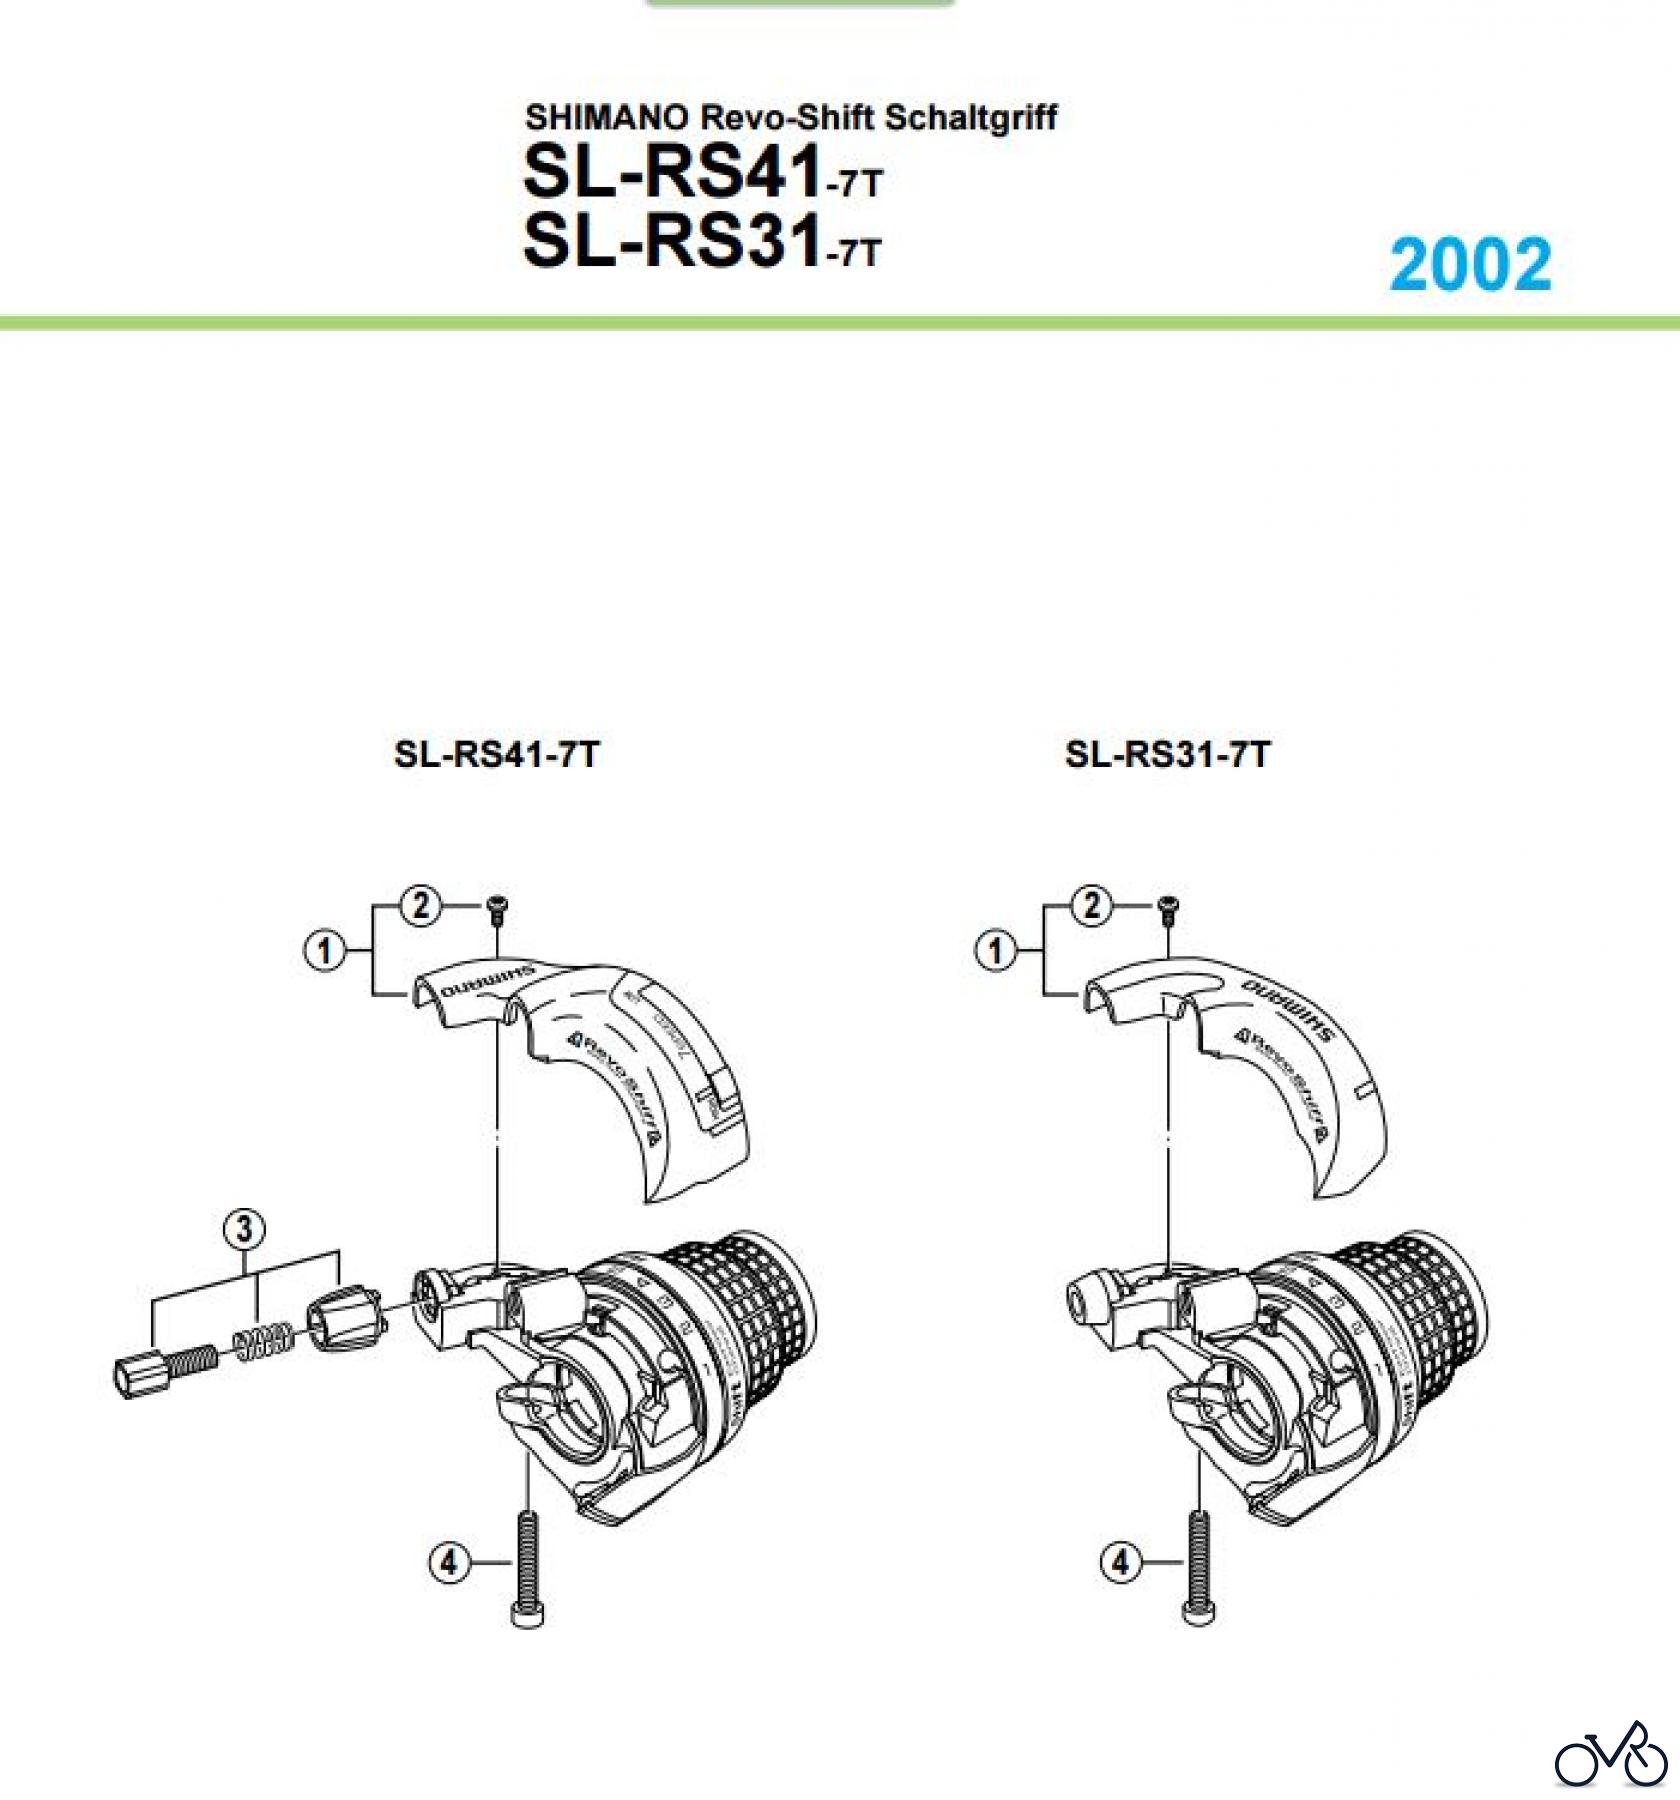  Shimano SL Shift Lever - Schalthebel SL-RS41-7-RS31-7-02